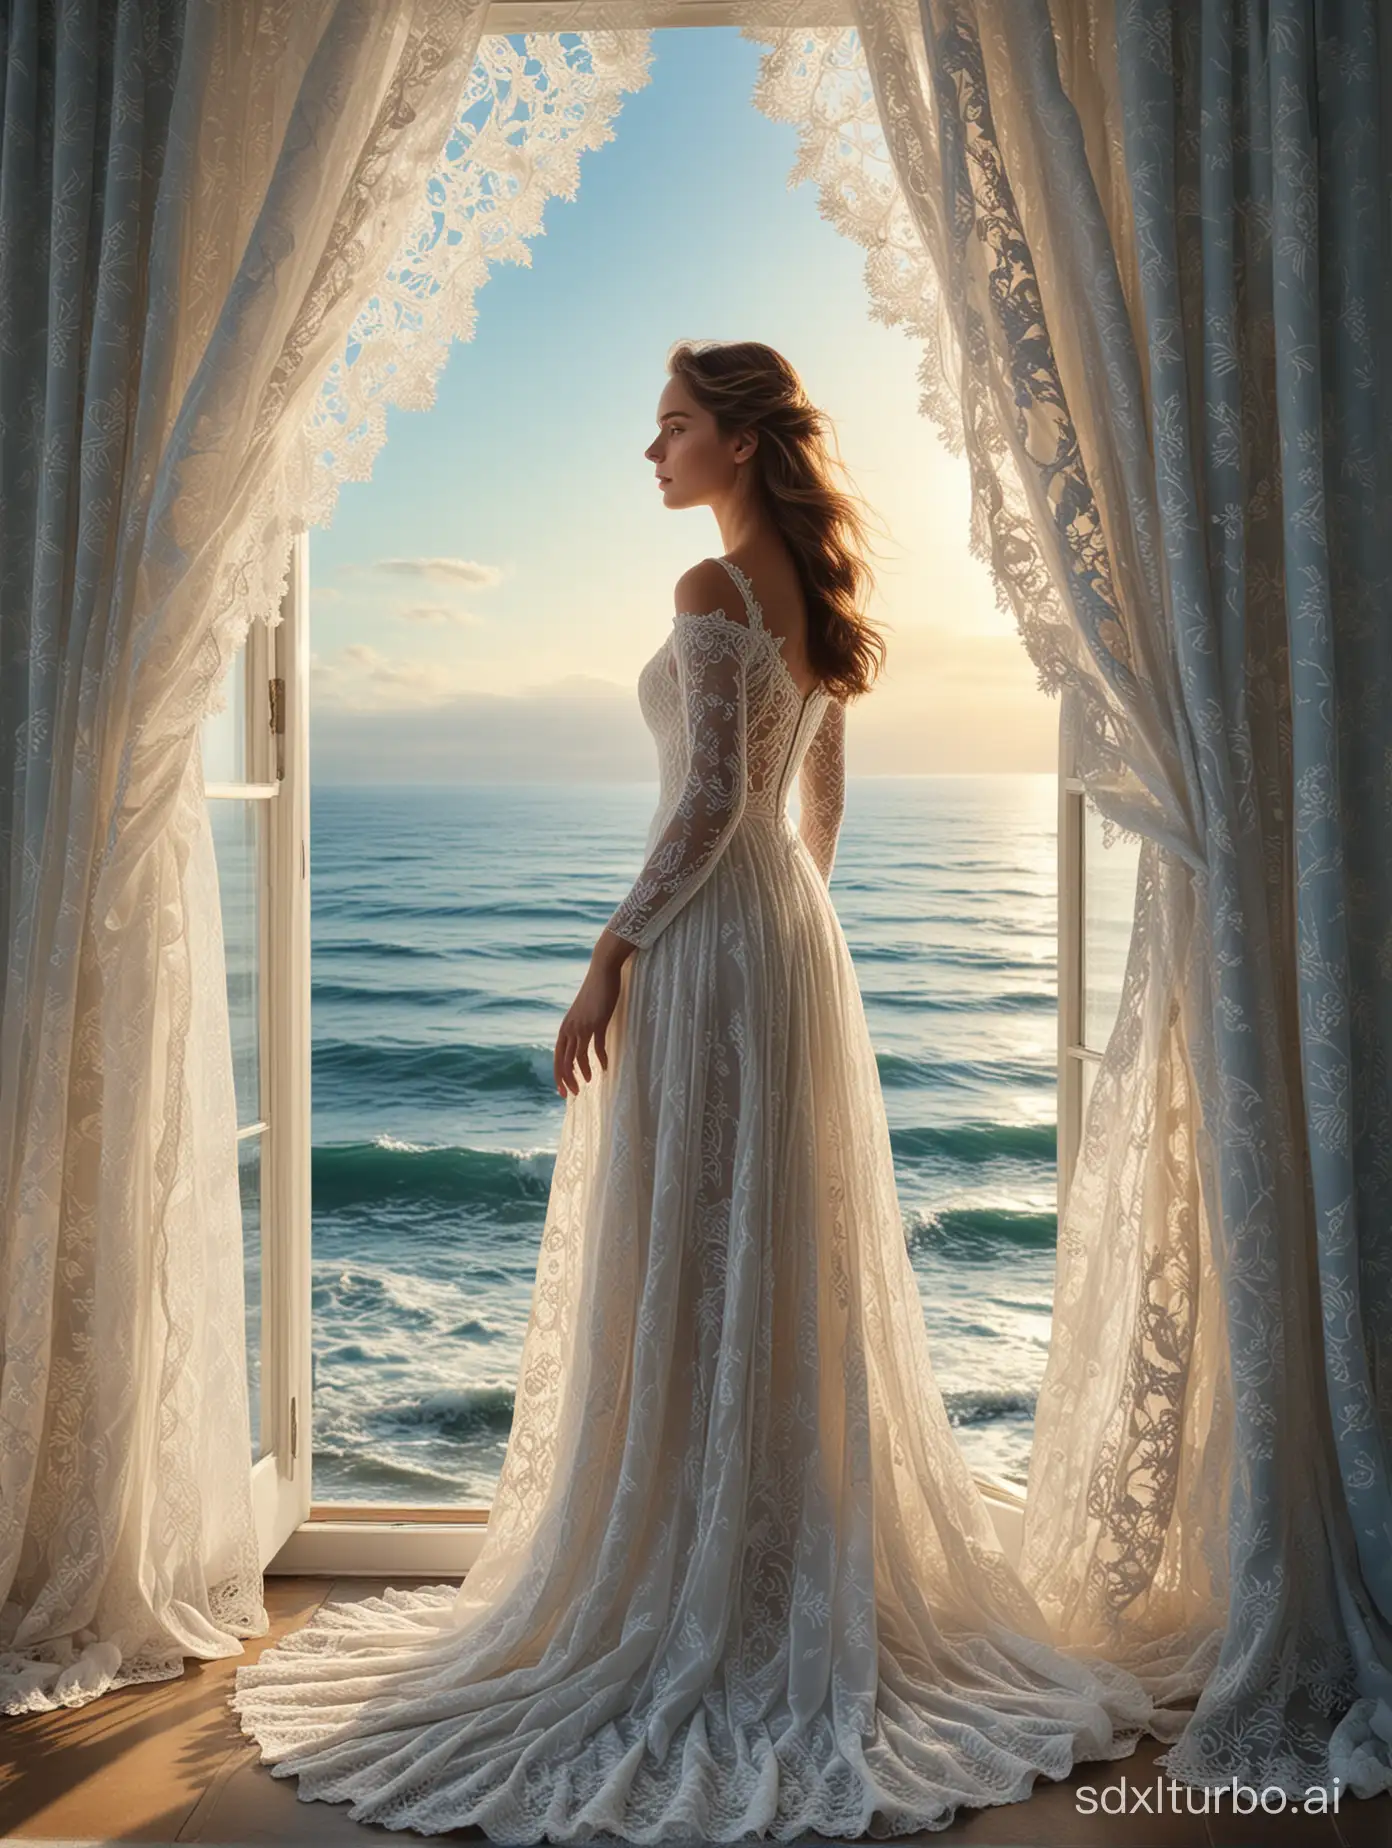 Elegant-Woman-Gazing-at-Vast-Blue-Sea-from-Window